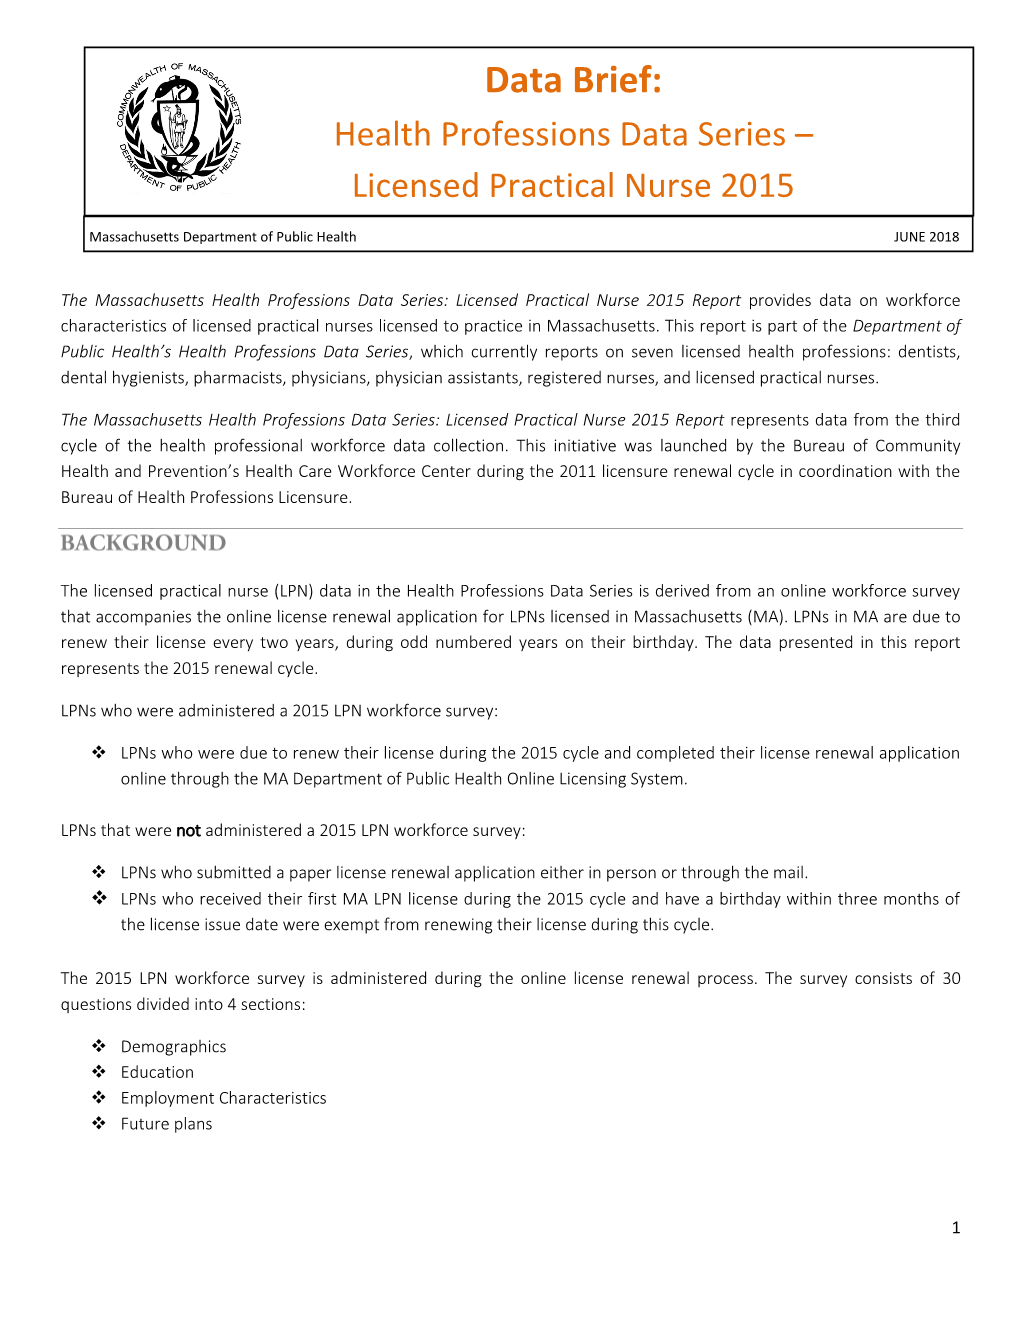 Health Professions Data Series – Licensed Practical Nurse 2015